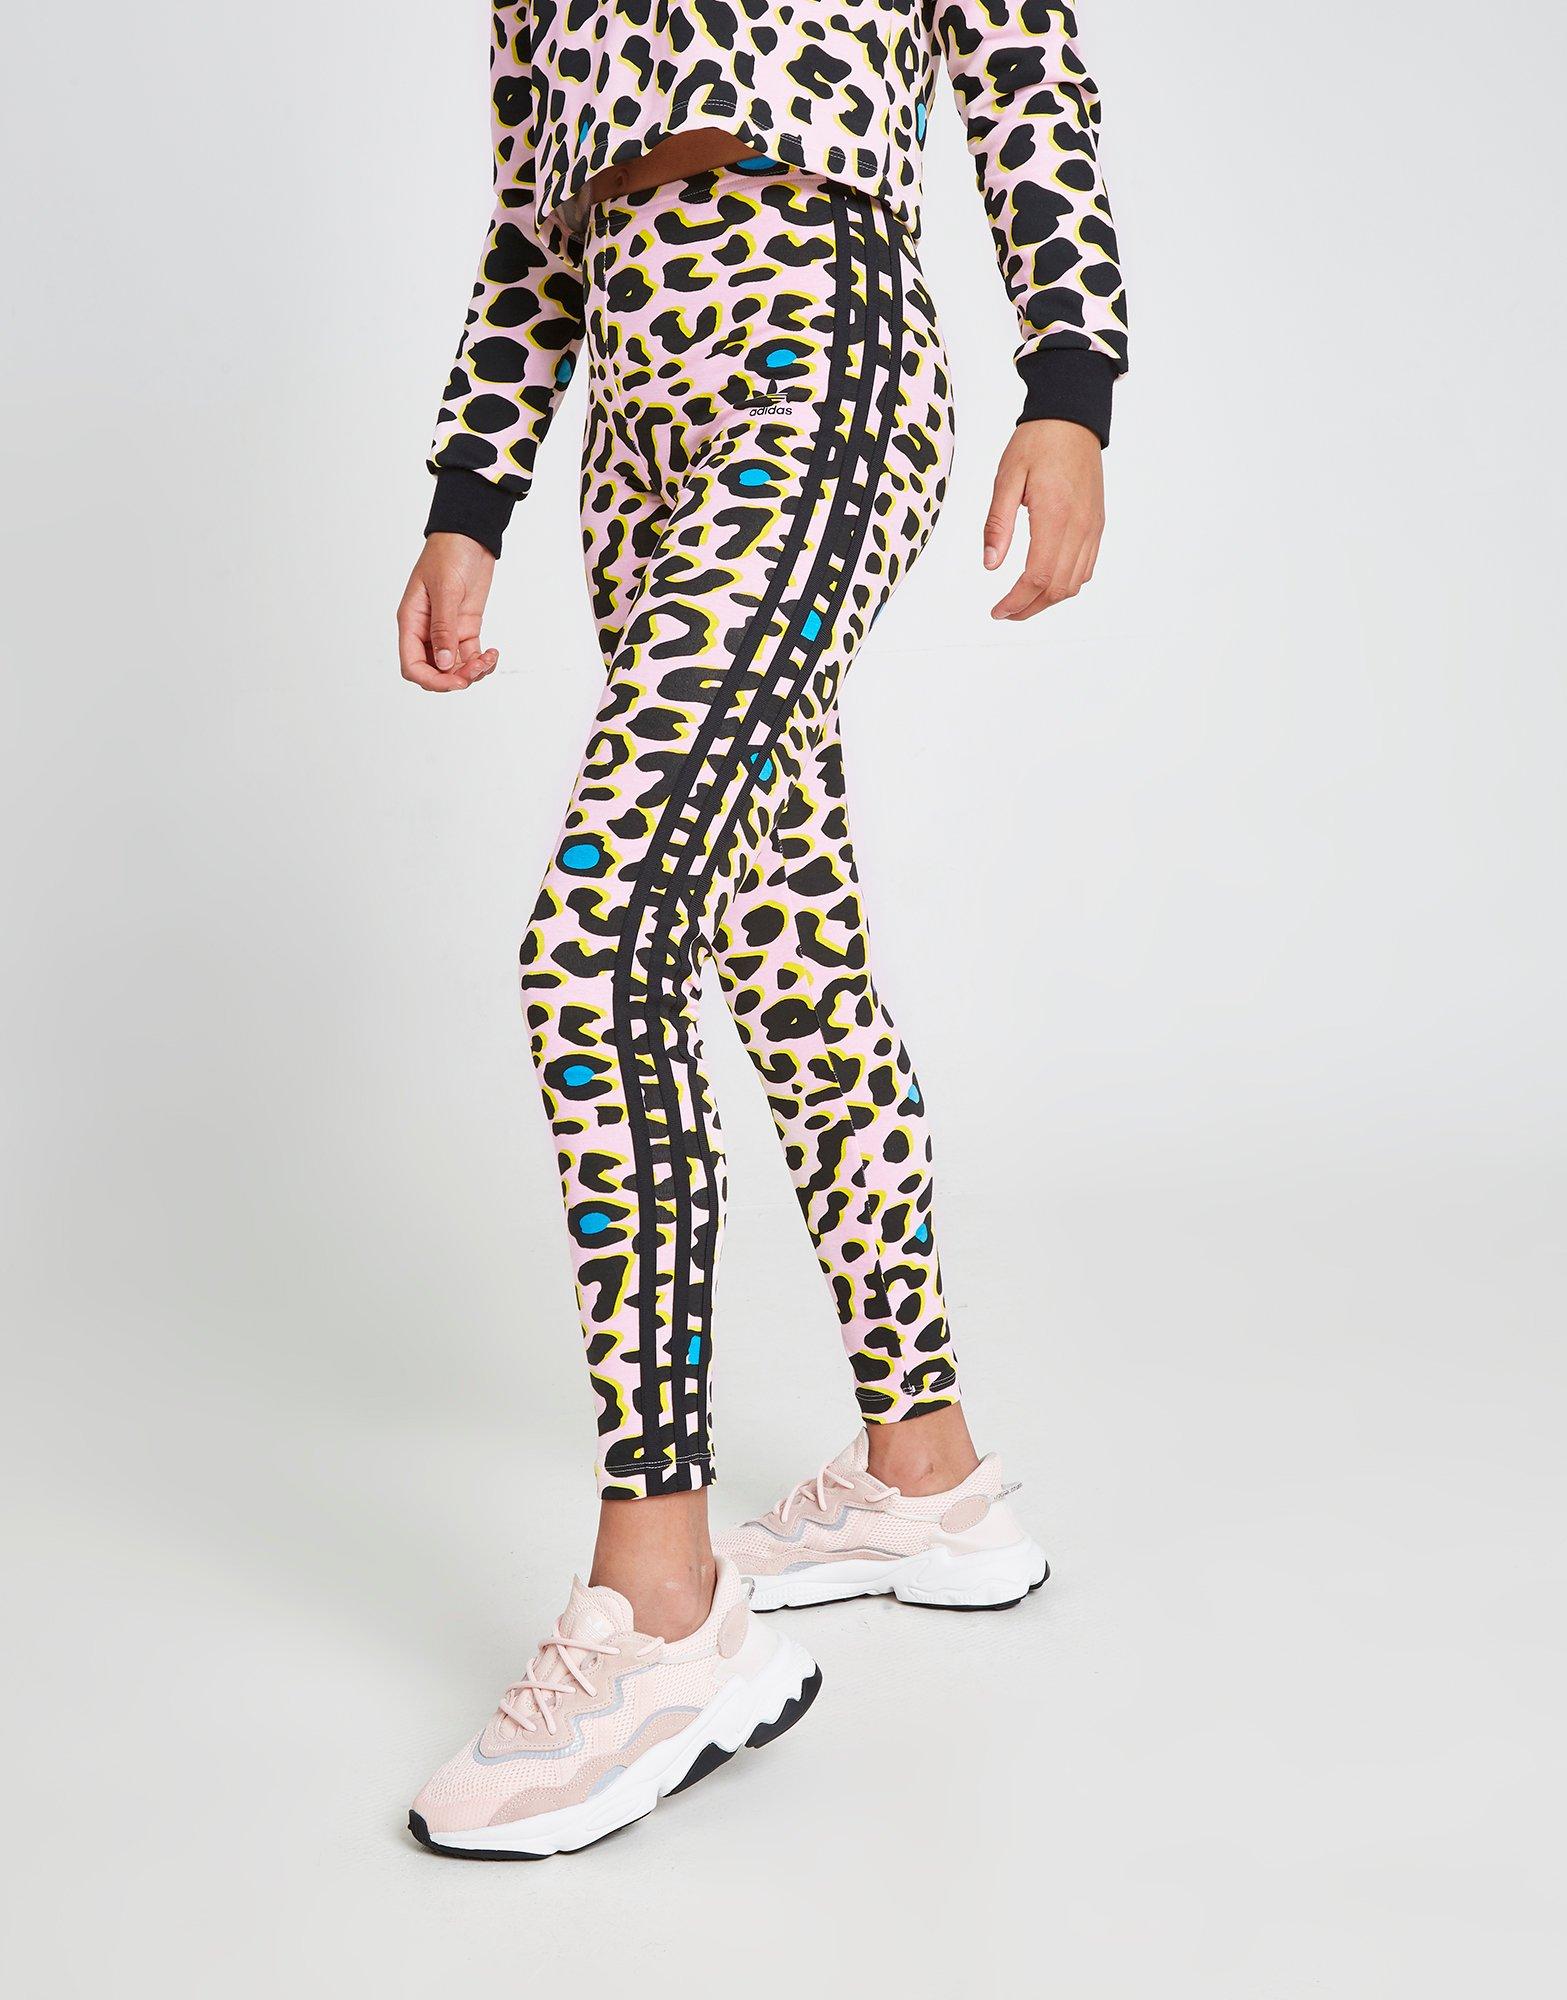 adidas leggings leopard print